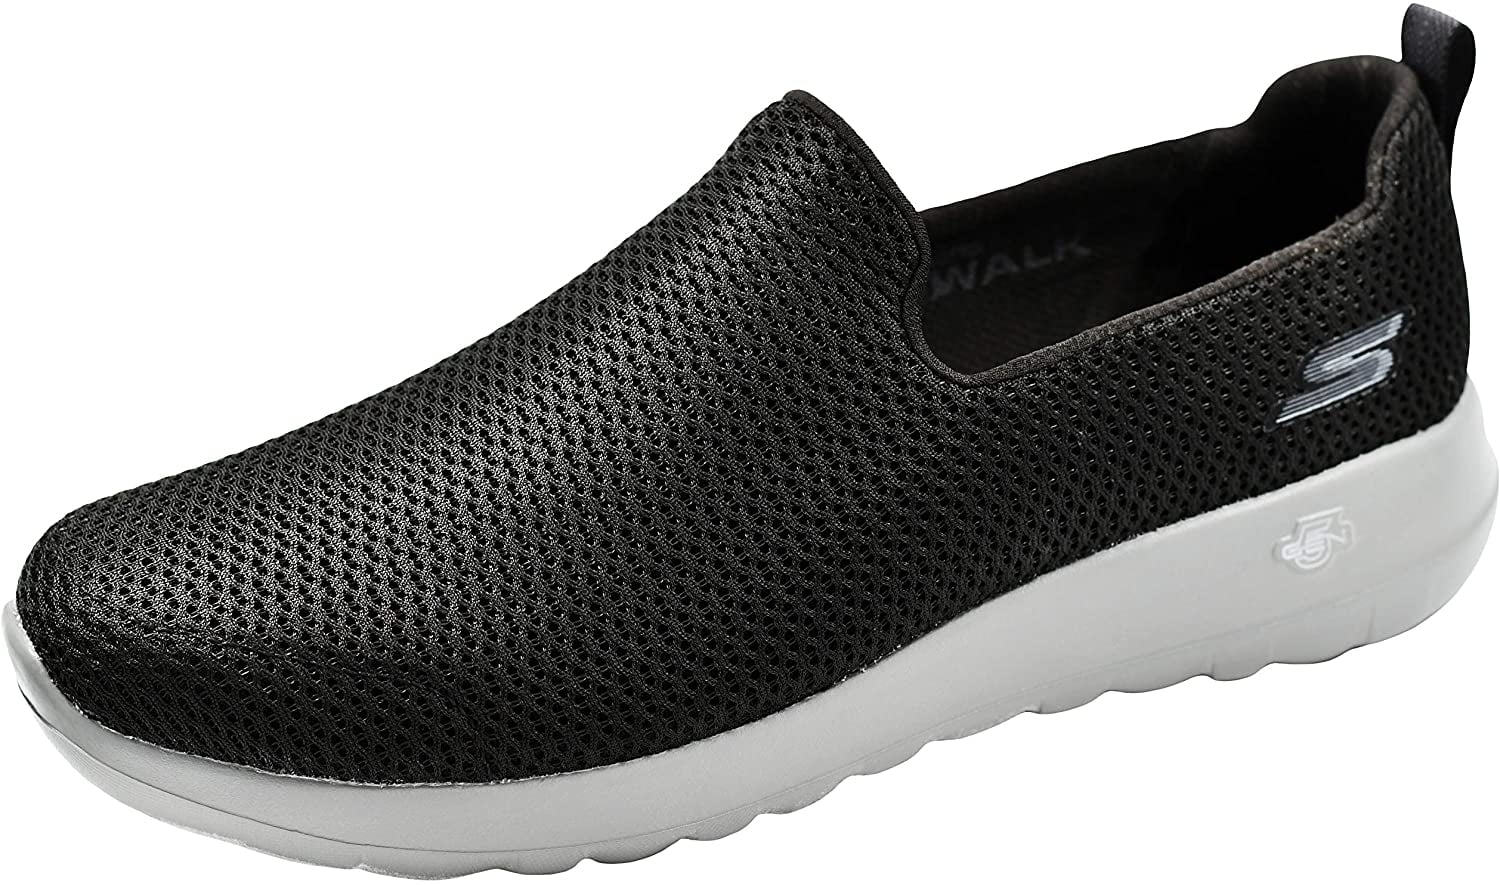 Skechers - Skechers Men's Go Walk Max Slip-on Sneaker, Black/Grey, 12 M ...